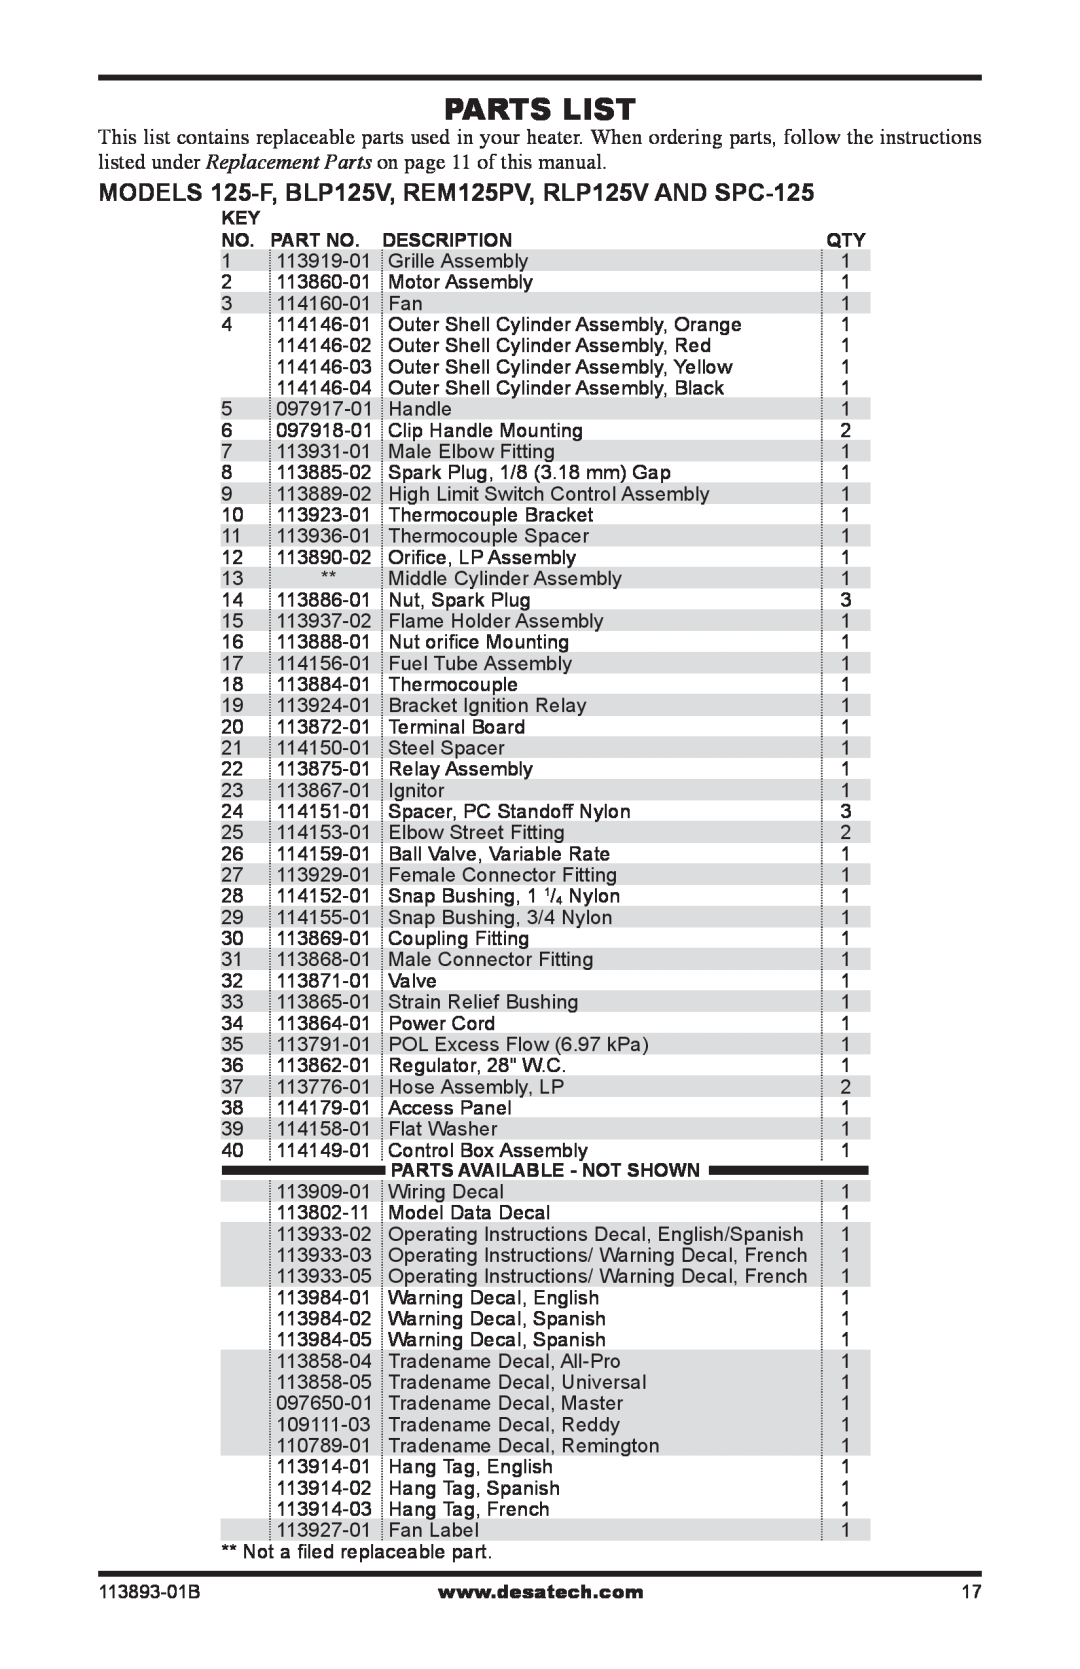 Desa Air Conditioner owner manual Parts List, 113919-01 